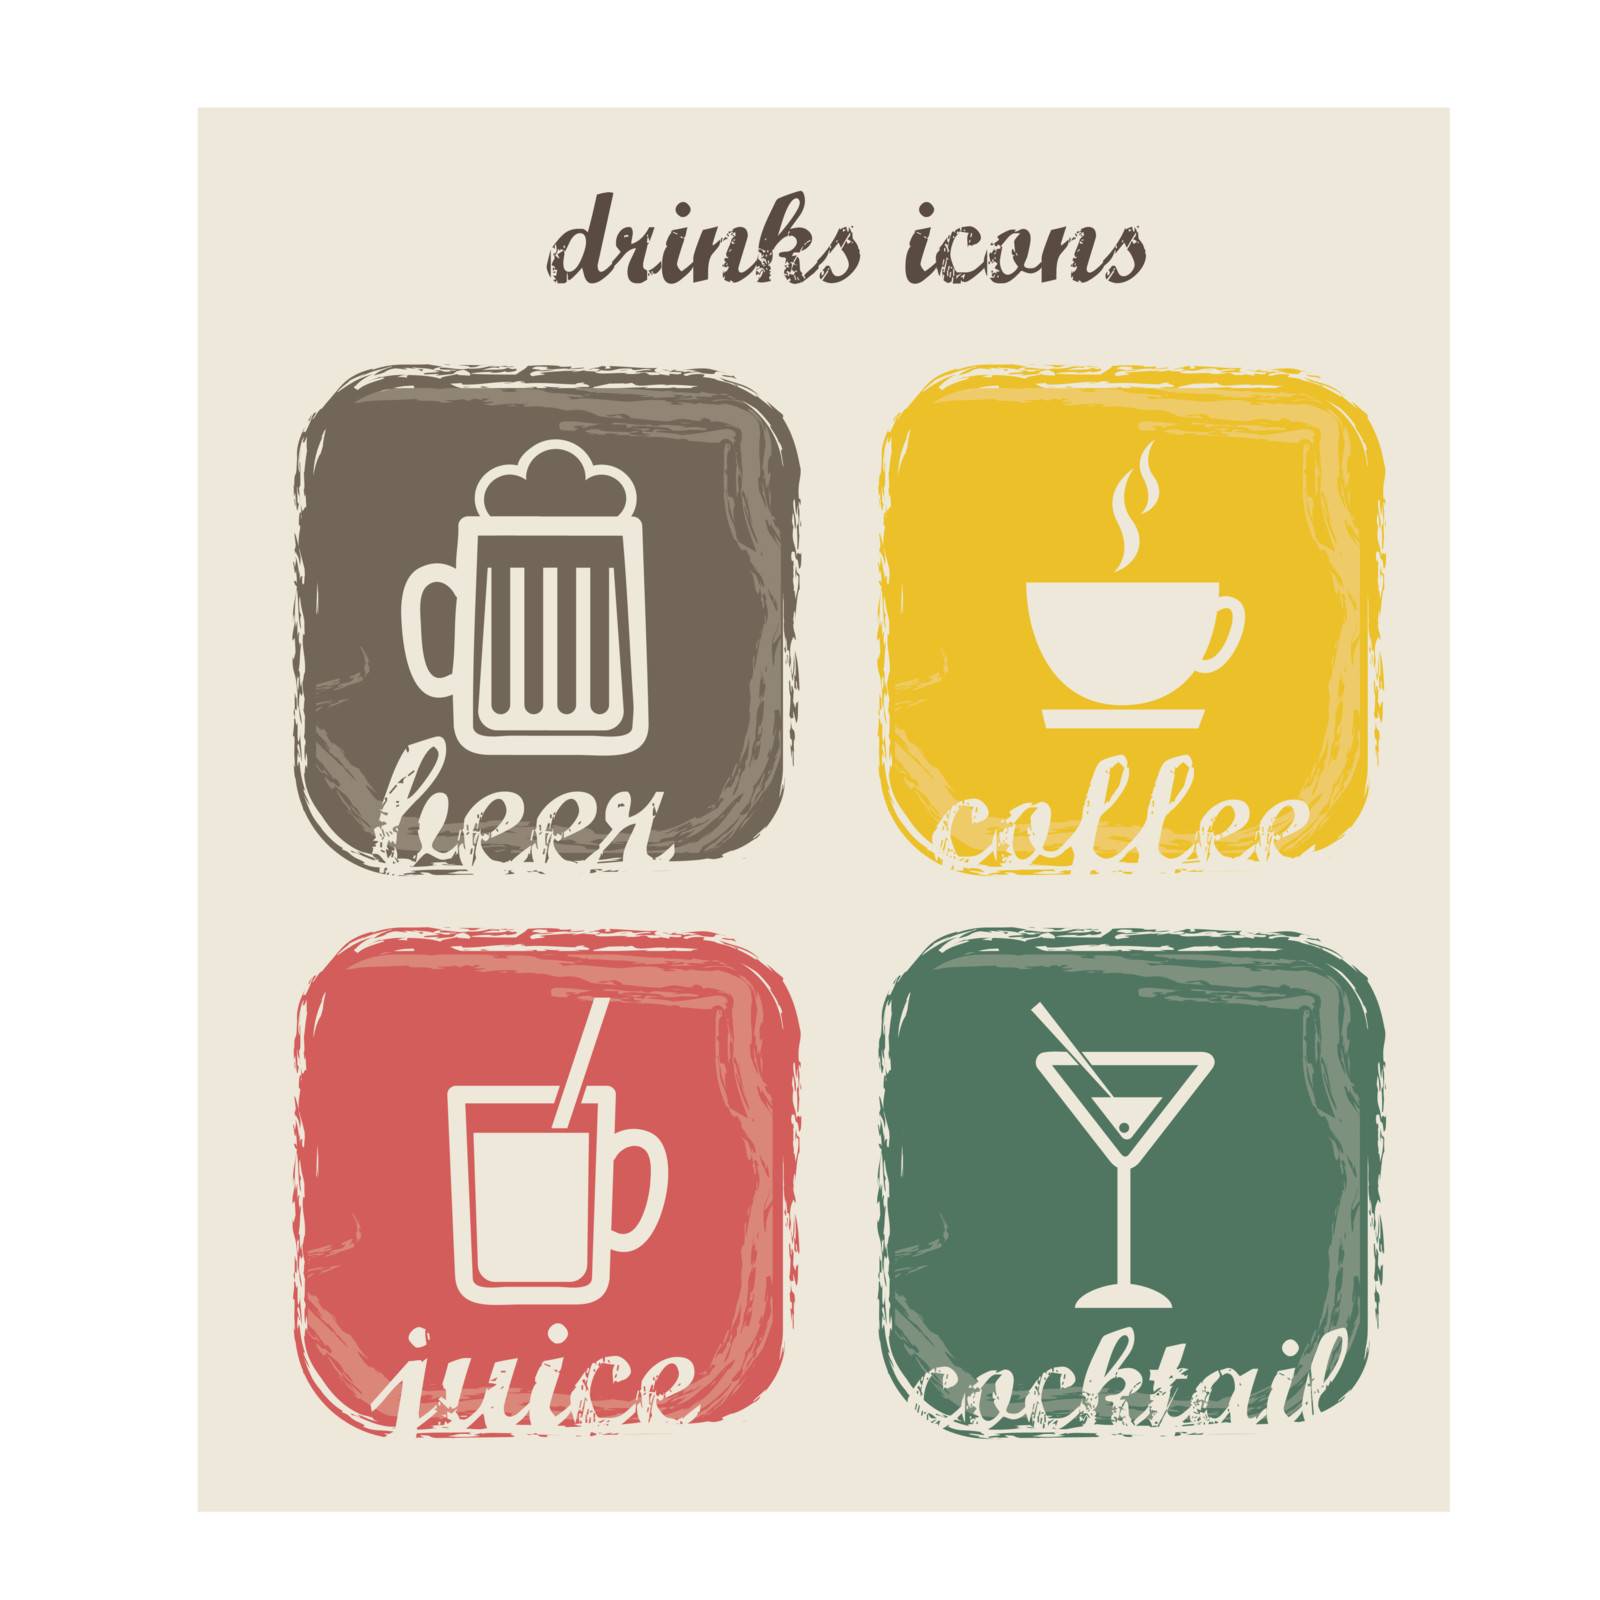 Drinks icons over vintage background vector illustration